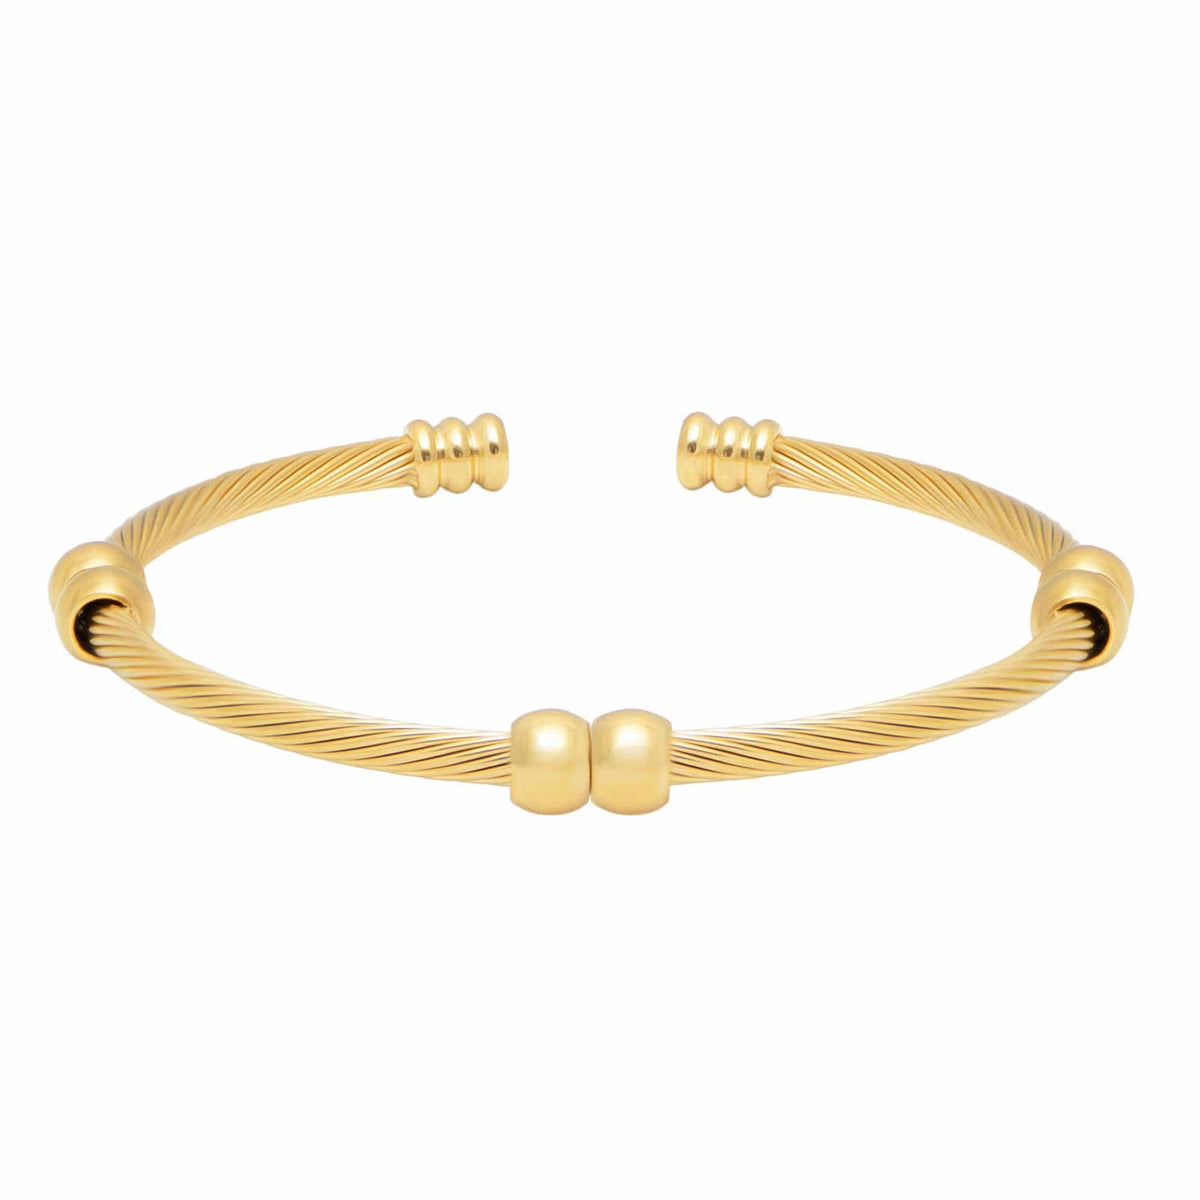 BohoMoon Stainless Steel Catherine Cuff Bracelet Gold